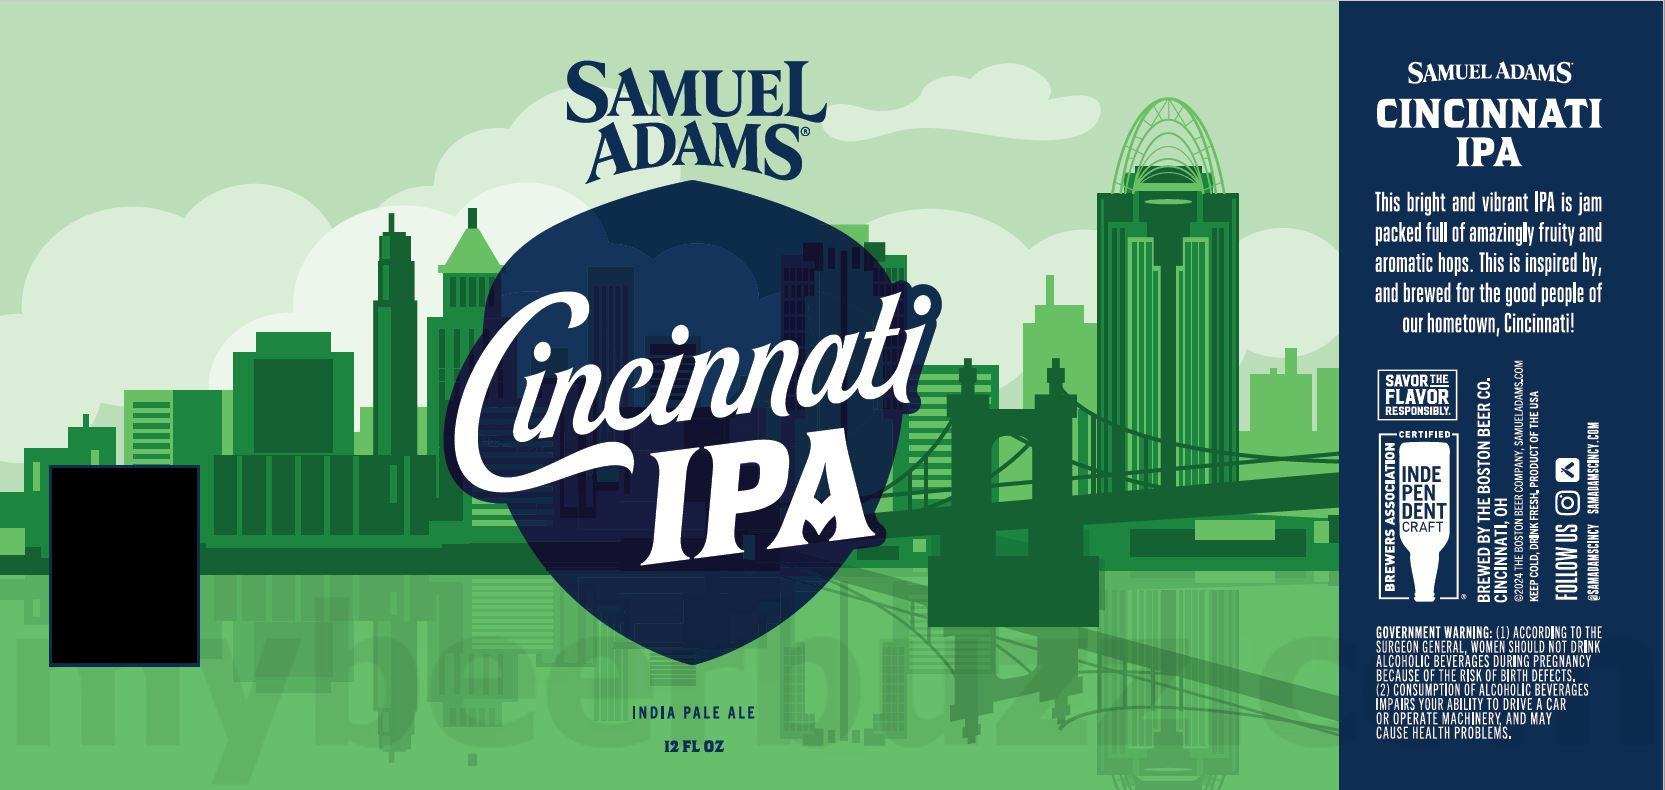 Samuel Adams Ohio Updating 513 & Cincinnati IPA